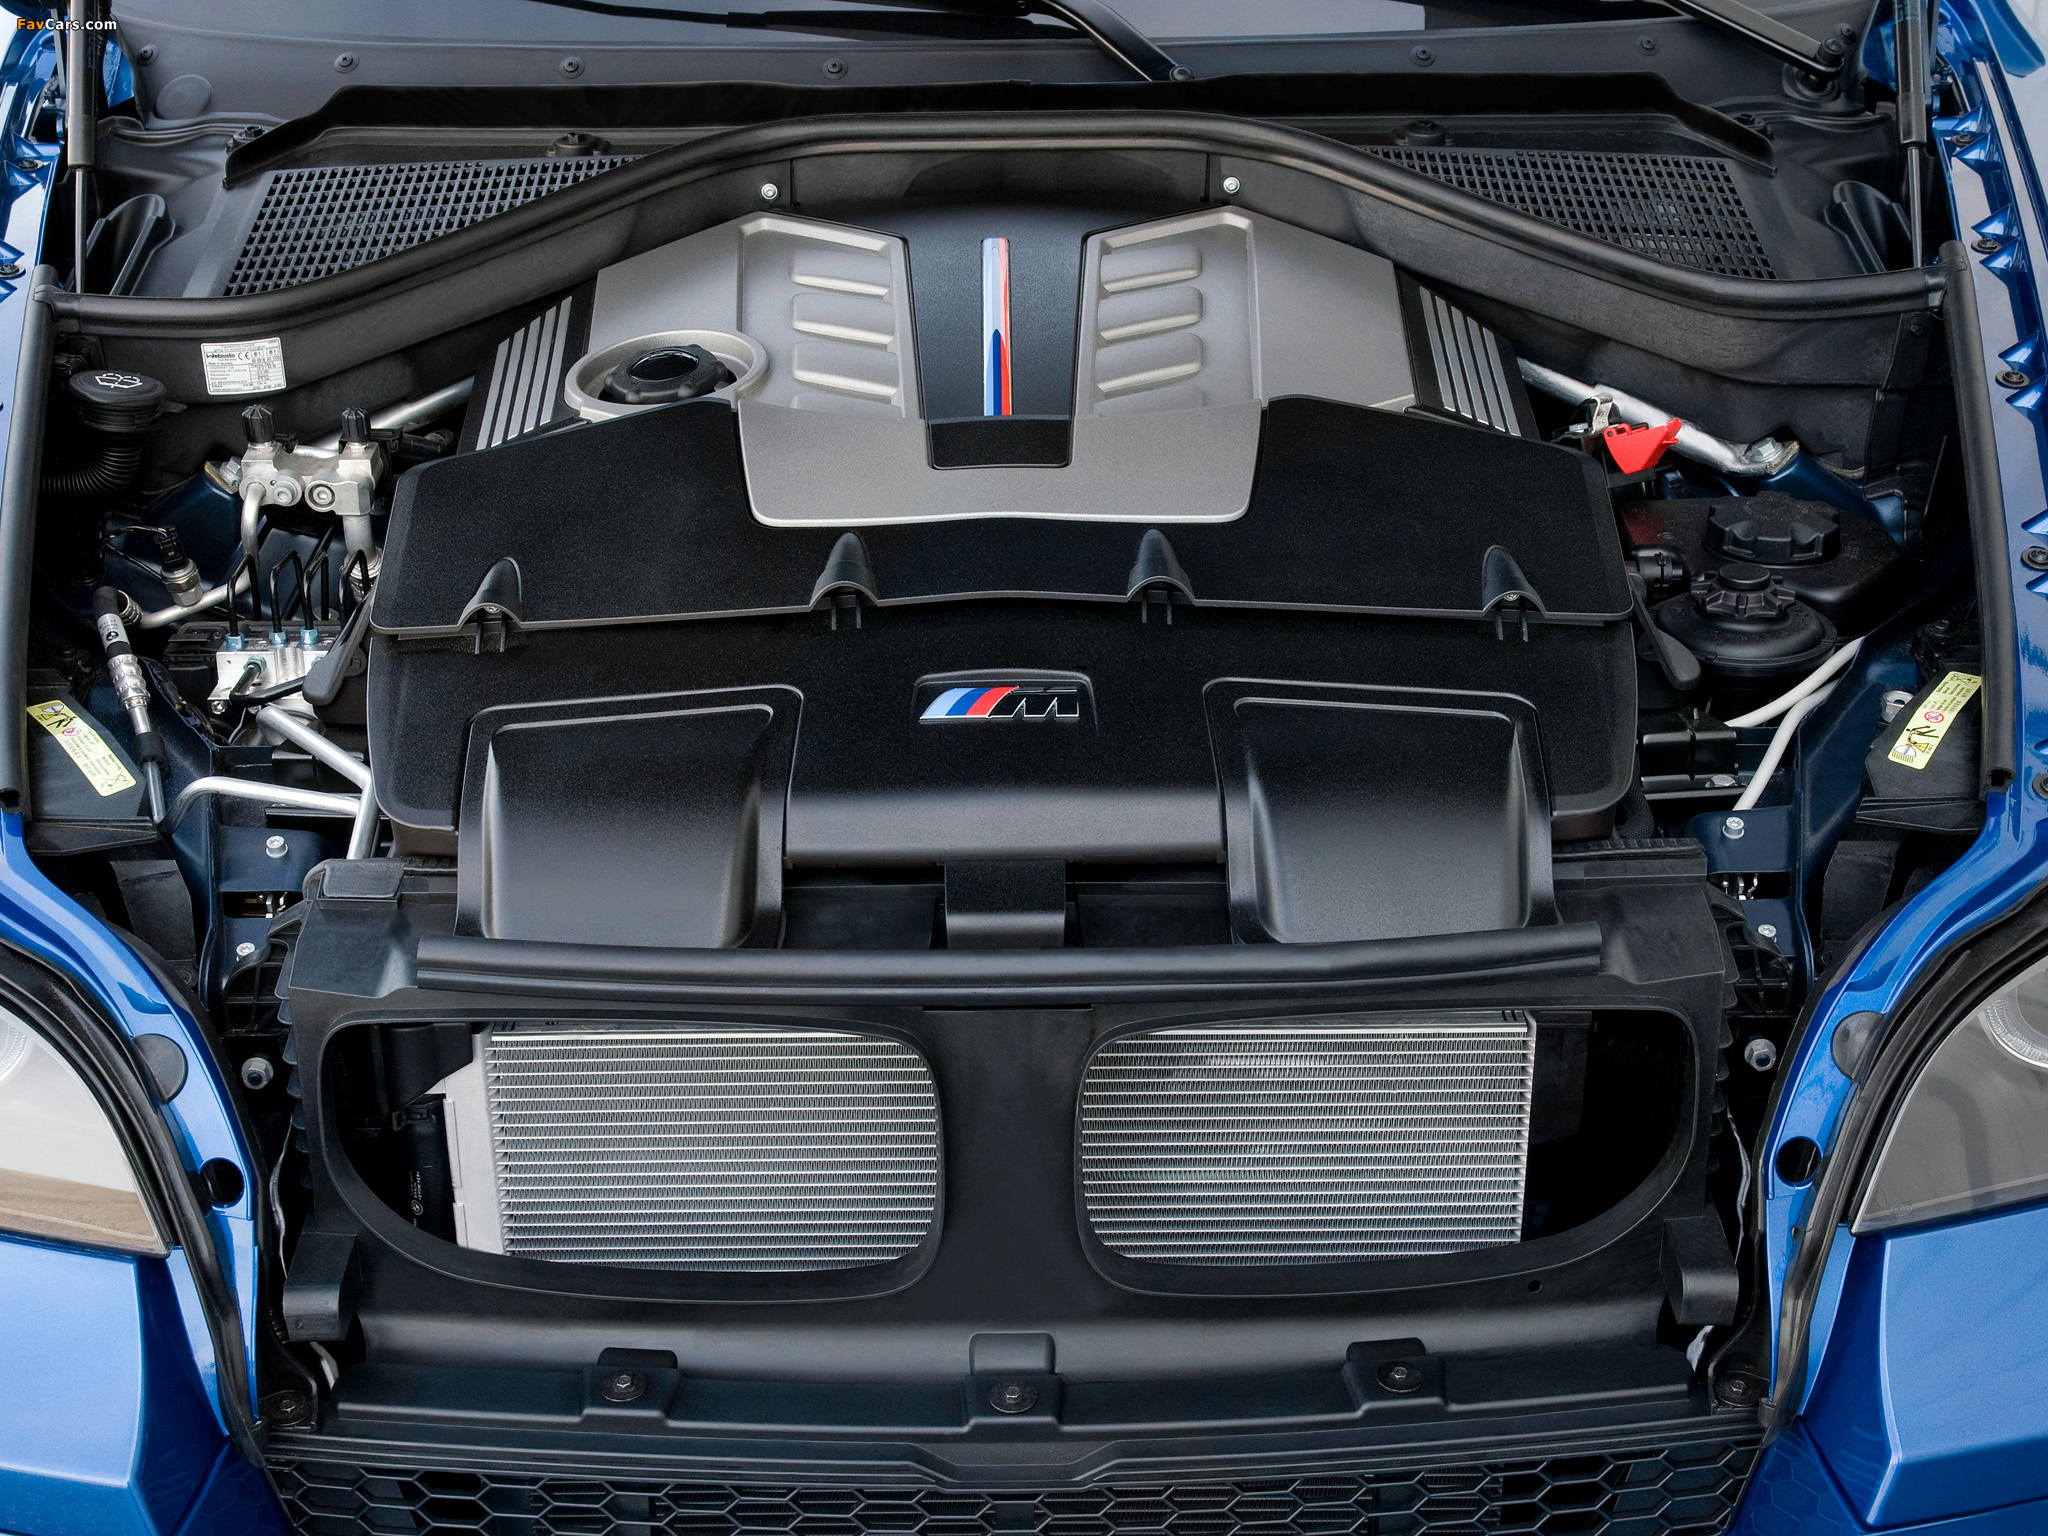 Двигатель бмв x6. Двигатель BMW x6m. Мотор BMW x5 e70. BMW m5 f10 под капотом. BMW x5 e70 под капотом.